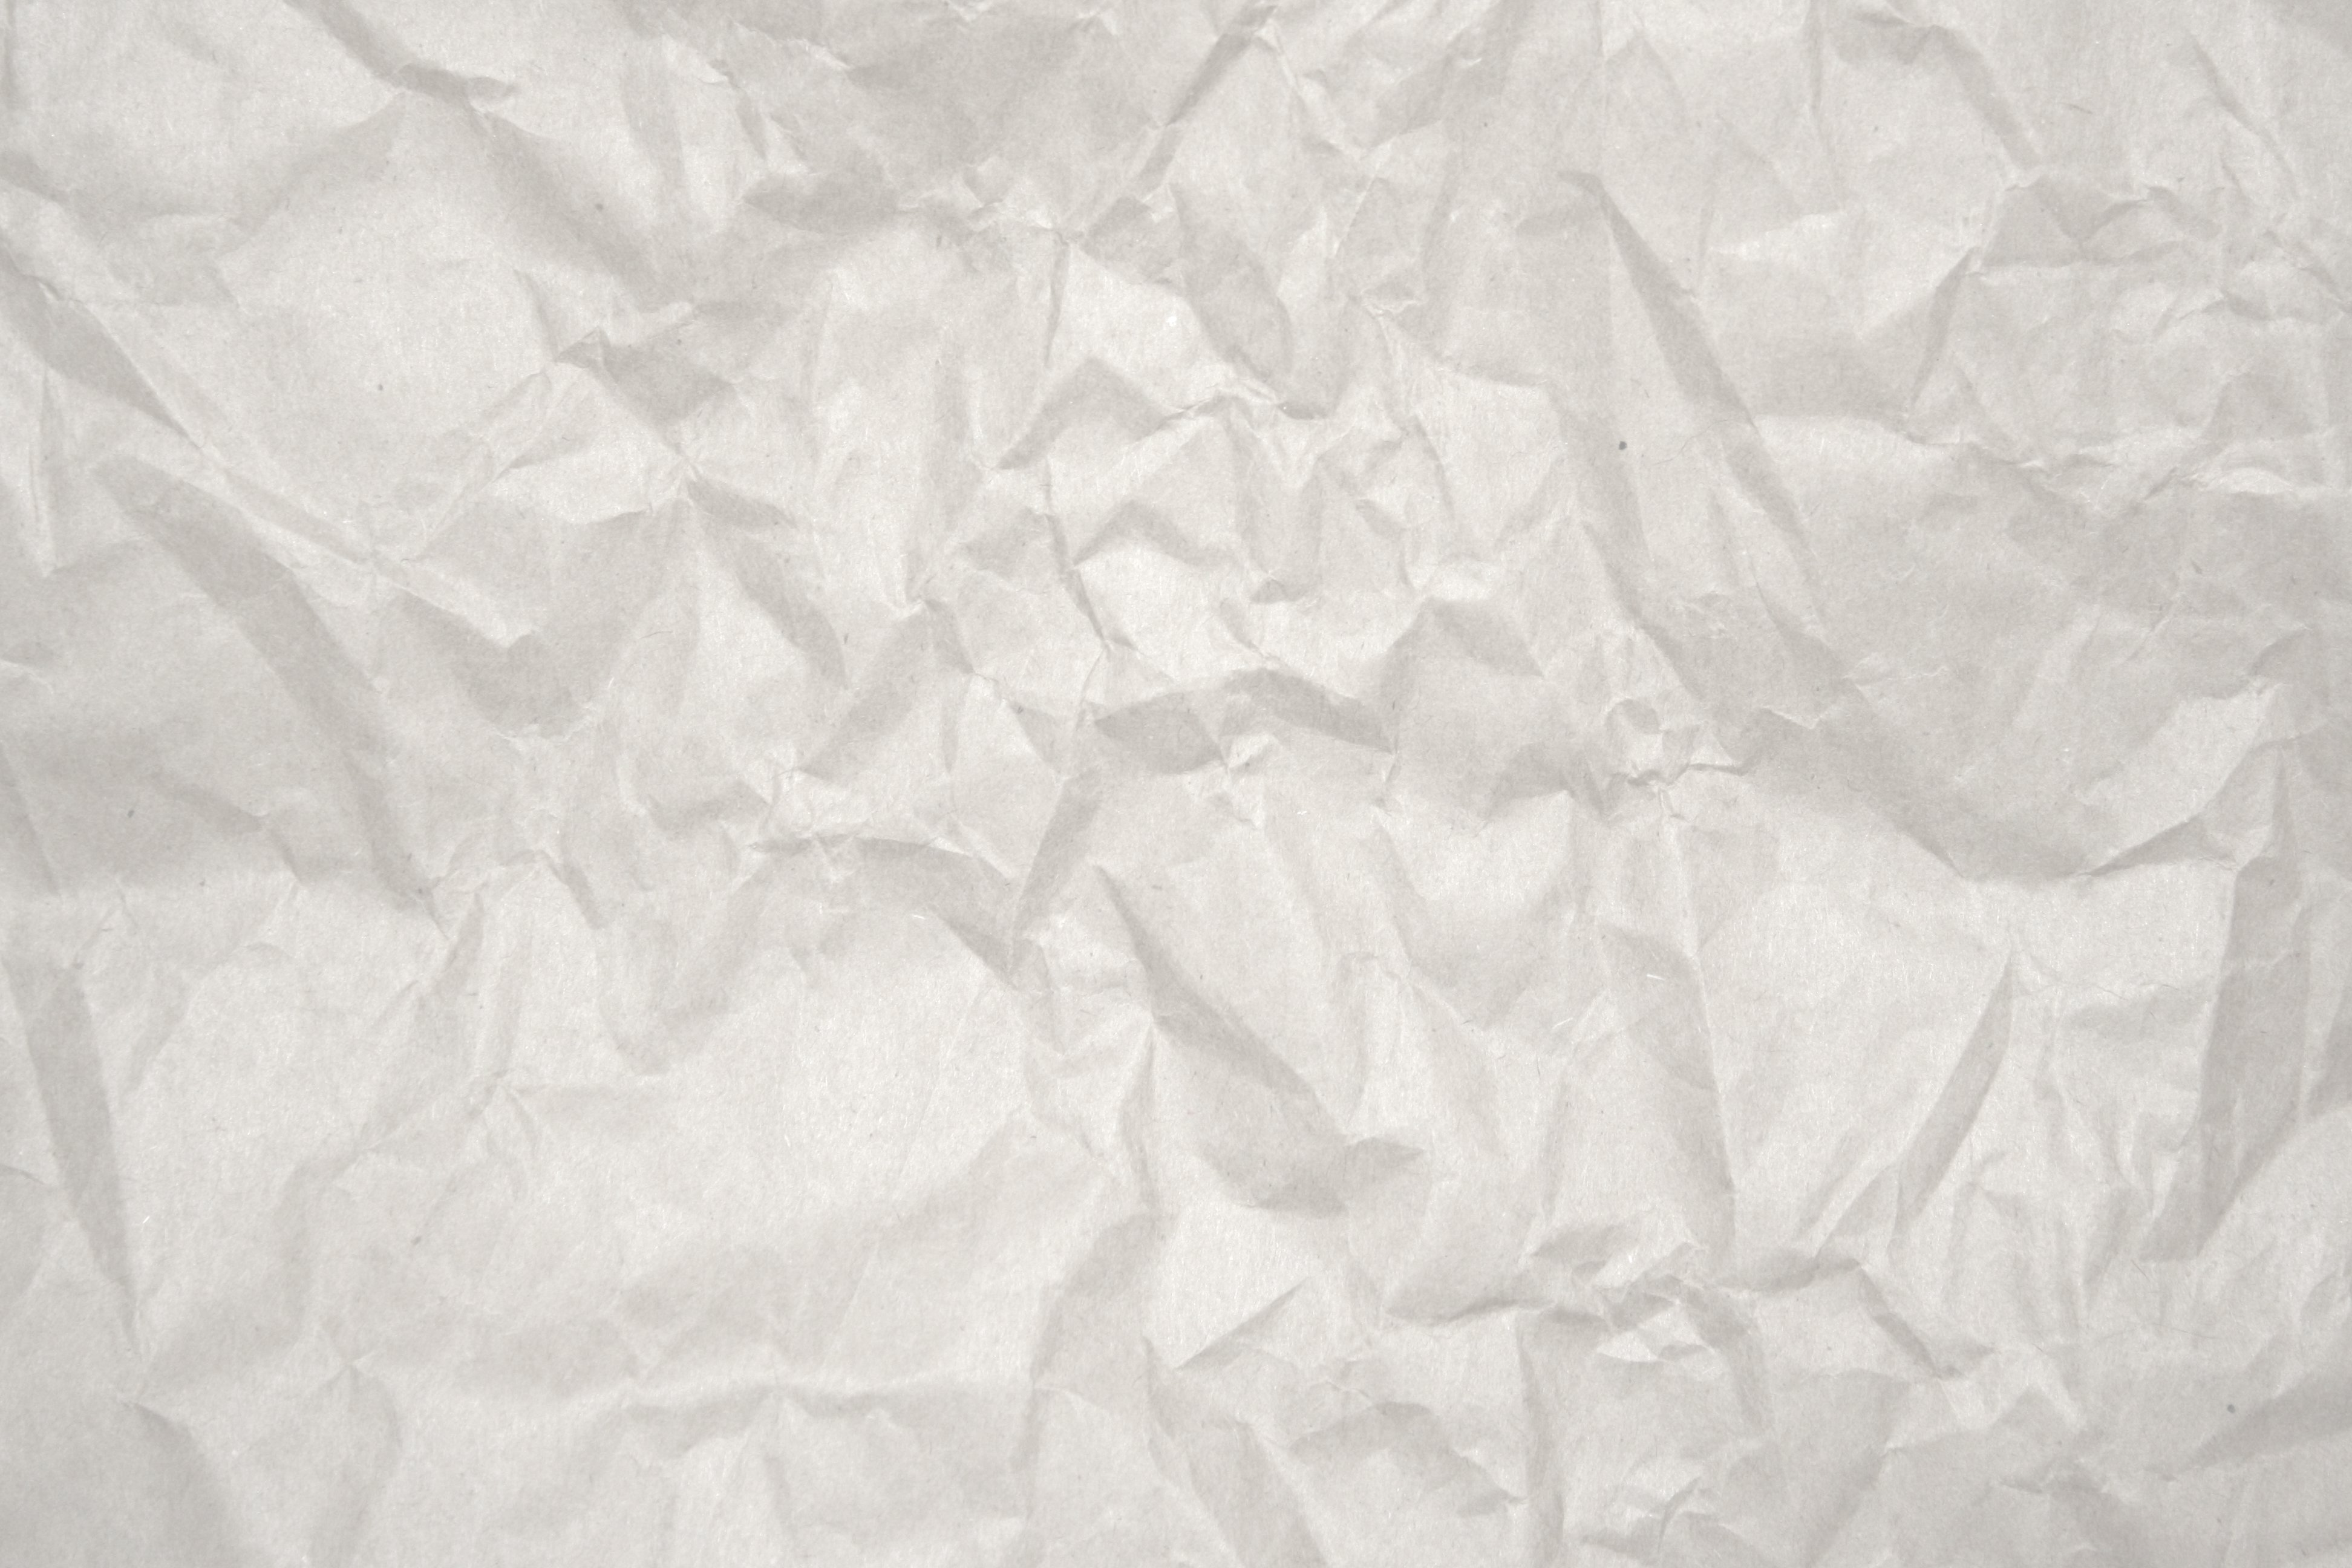 Crumpled White Paper Texture Picture | Free Photograph | Photos Public